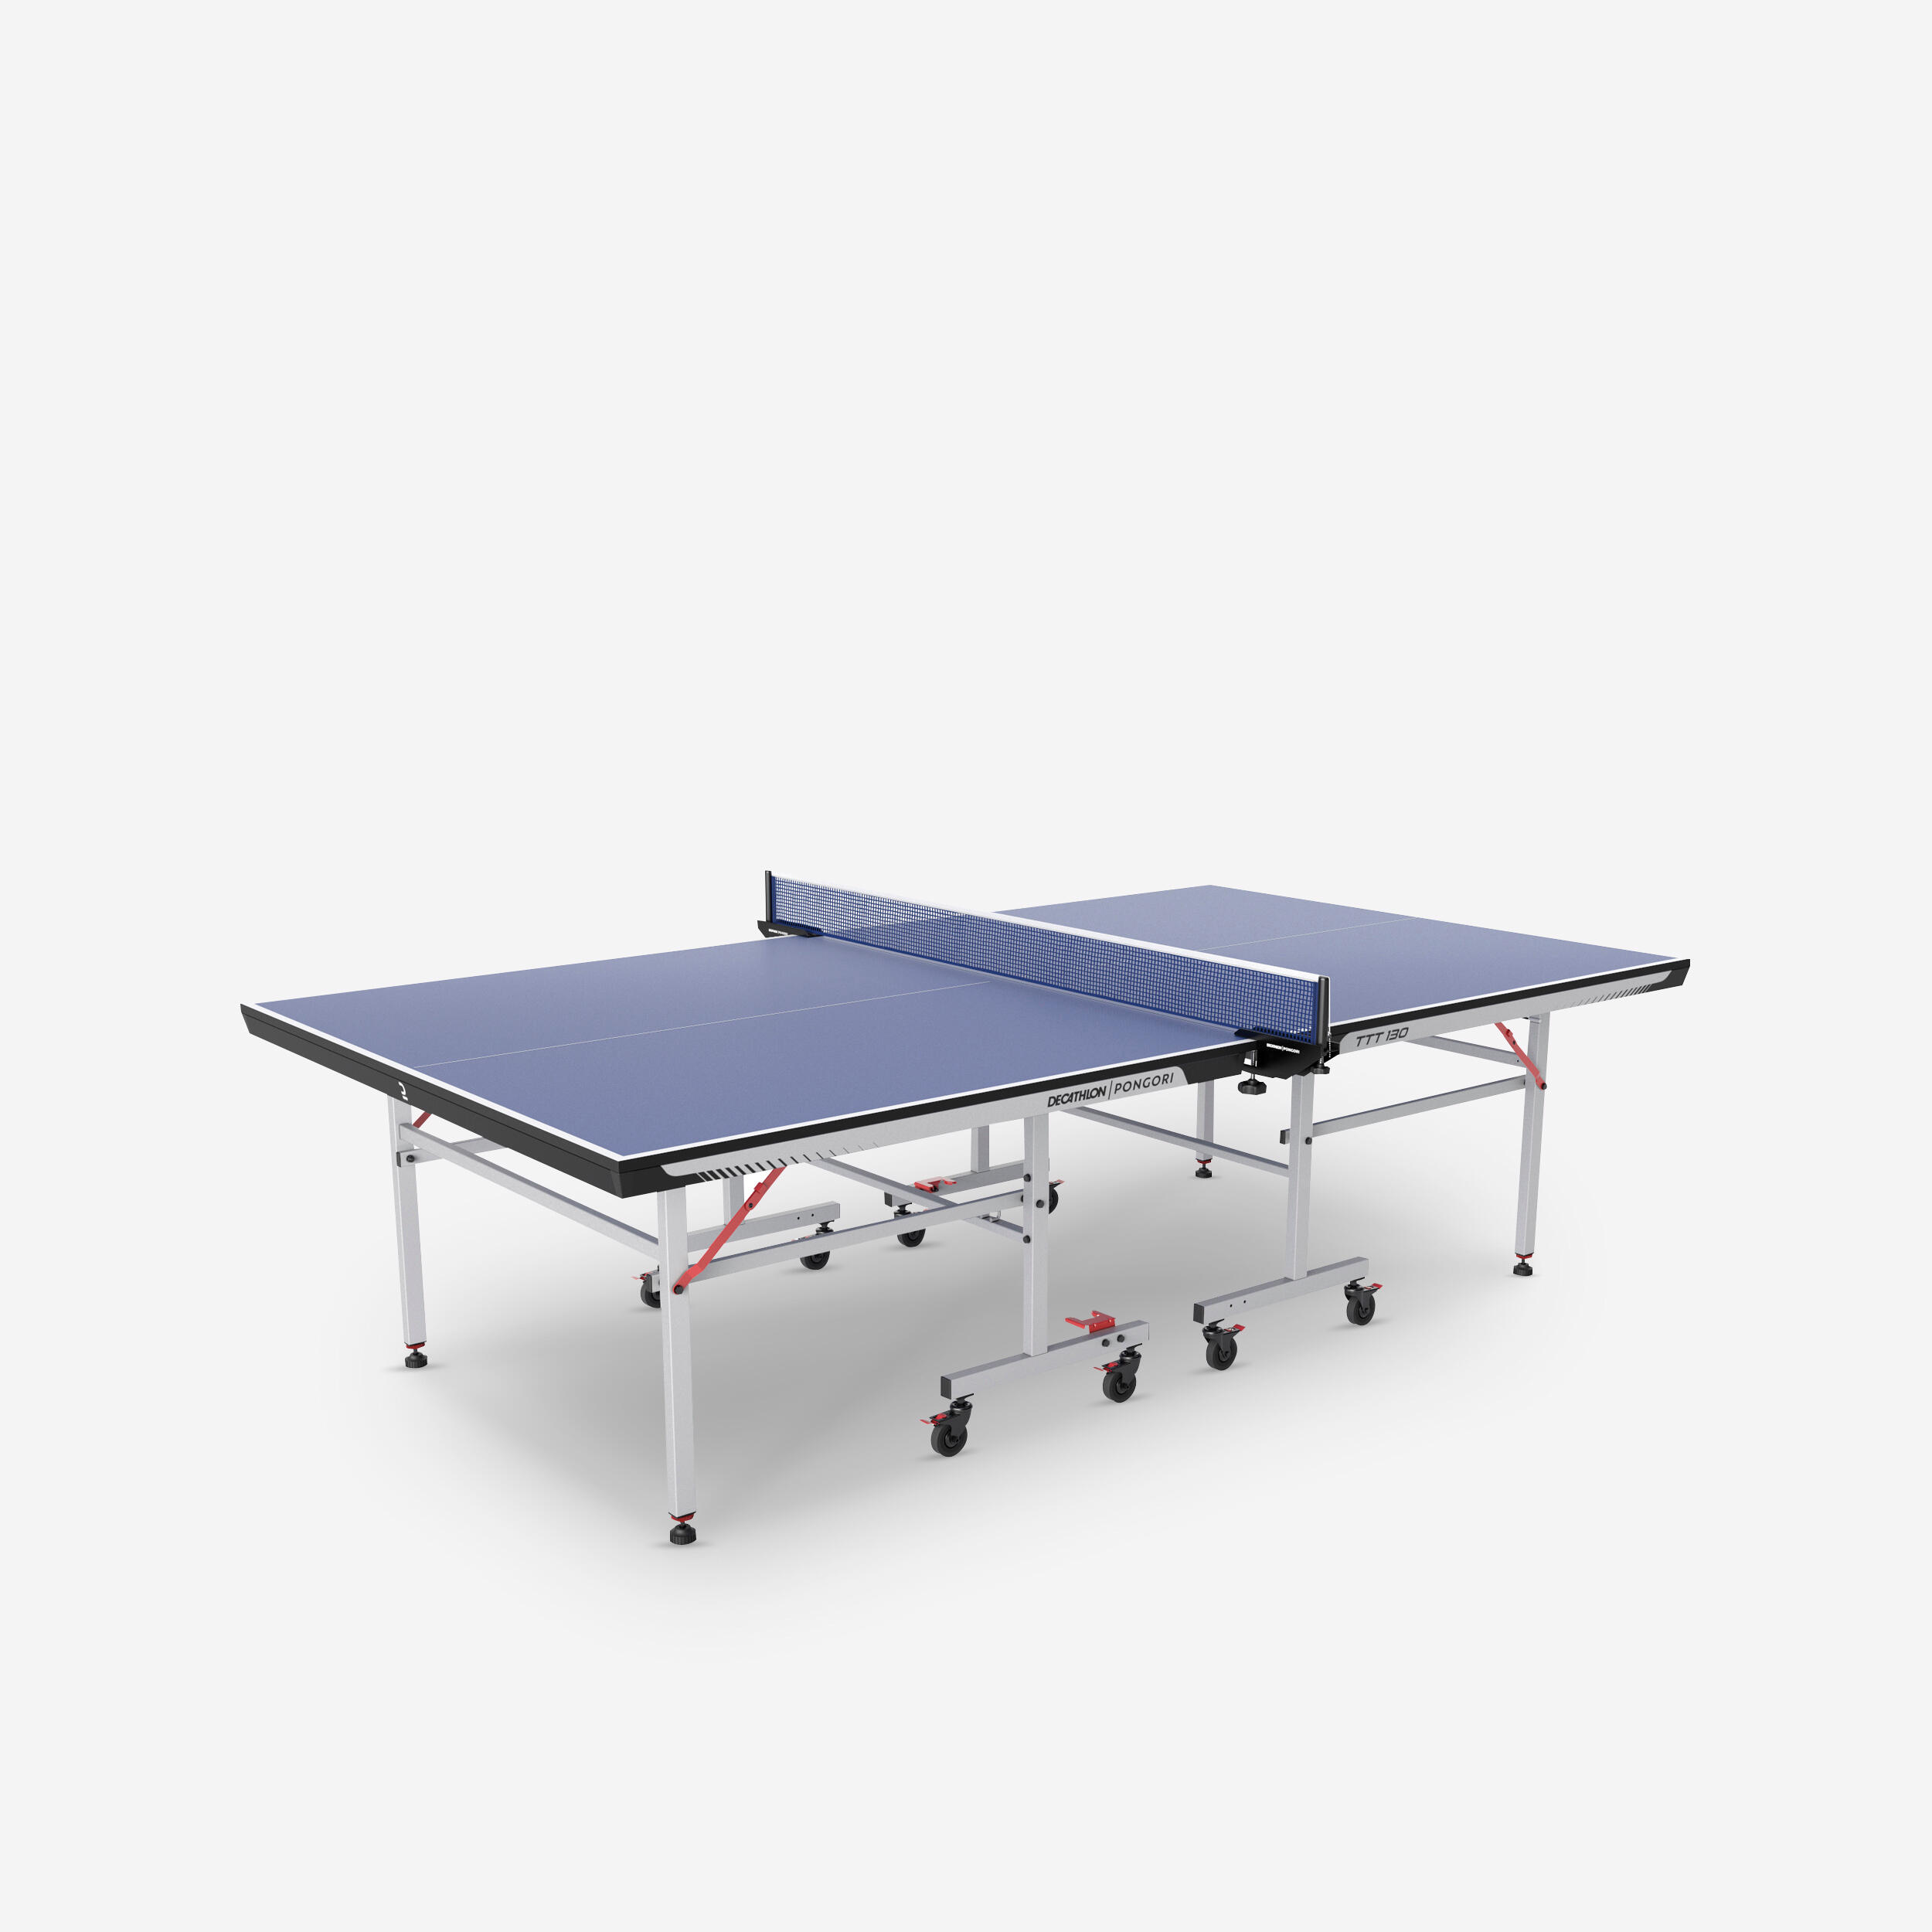 PONGORI Club Table Tennis Table TTT130